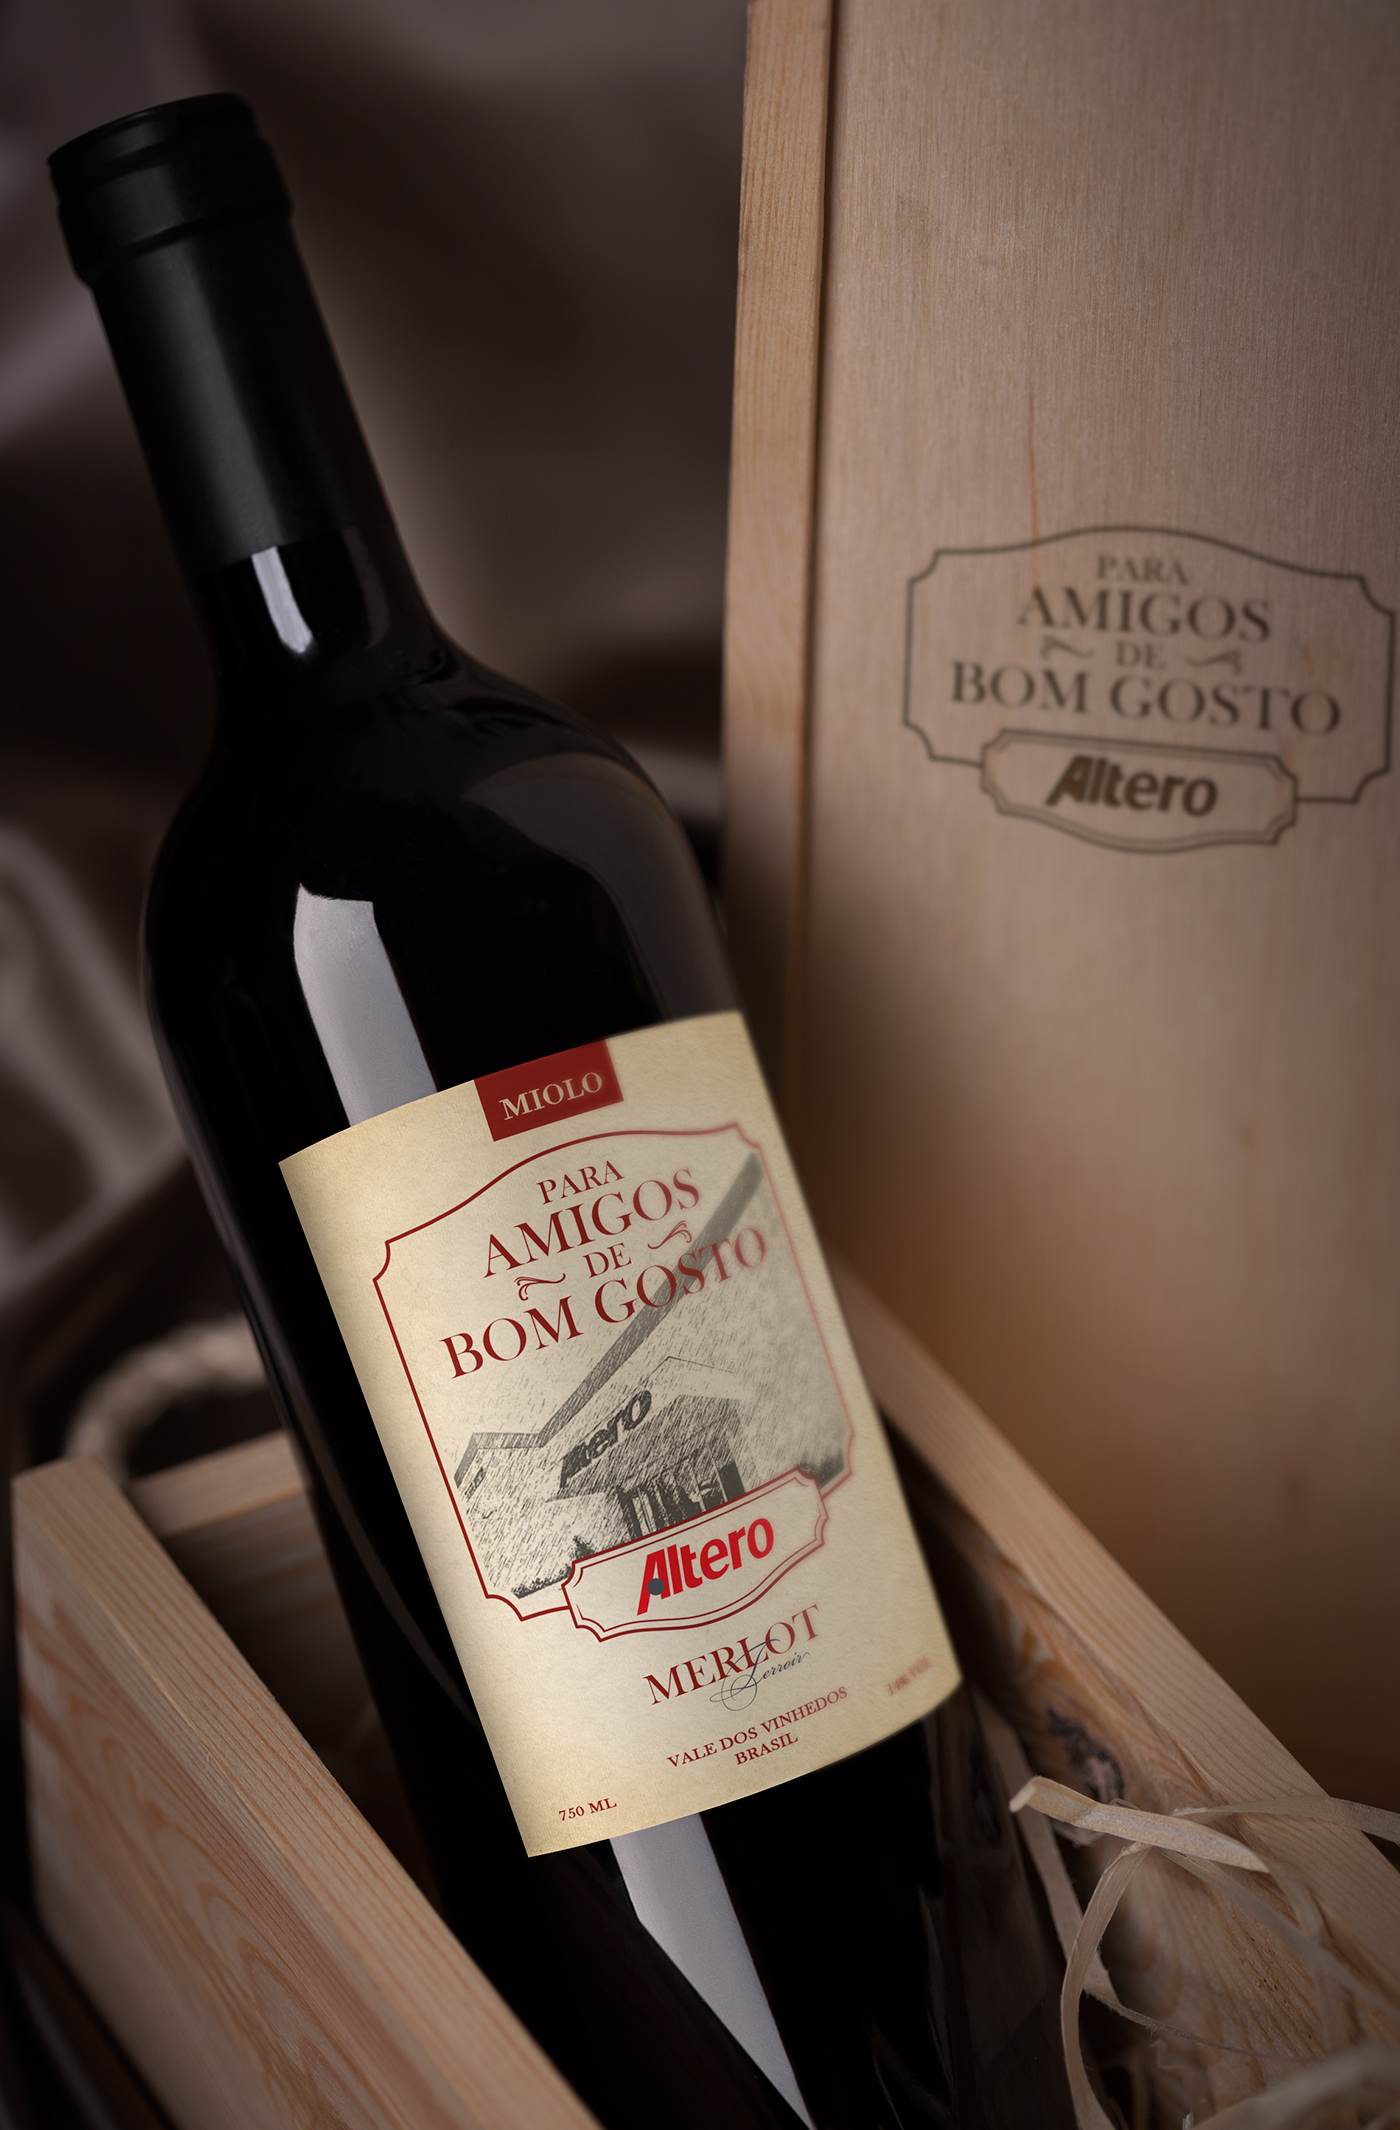 wine Altero rótulo protarget design vinho adega embalagem Merlot Miolo inspire